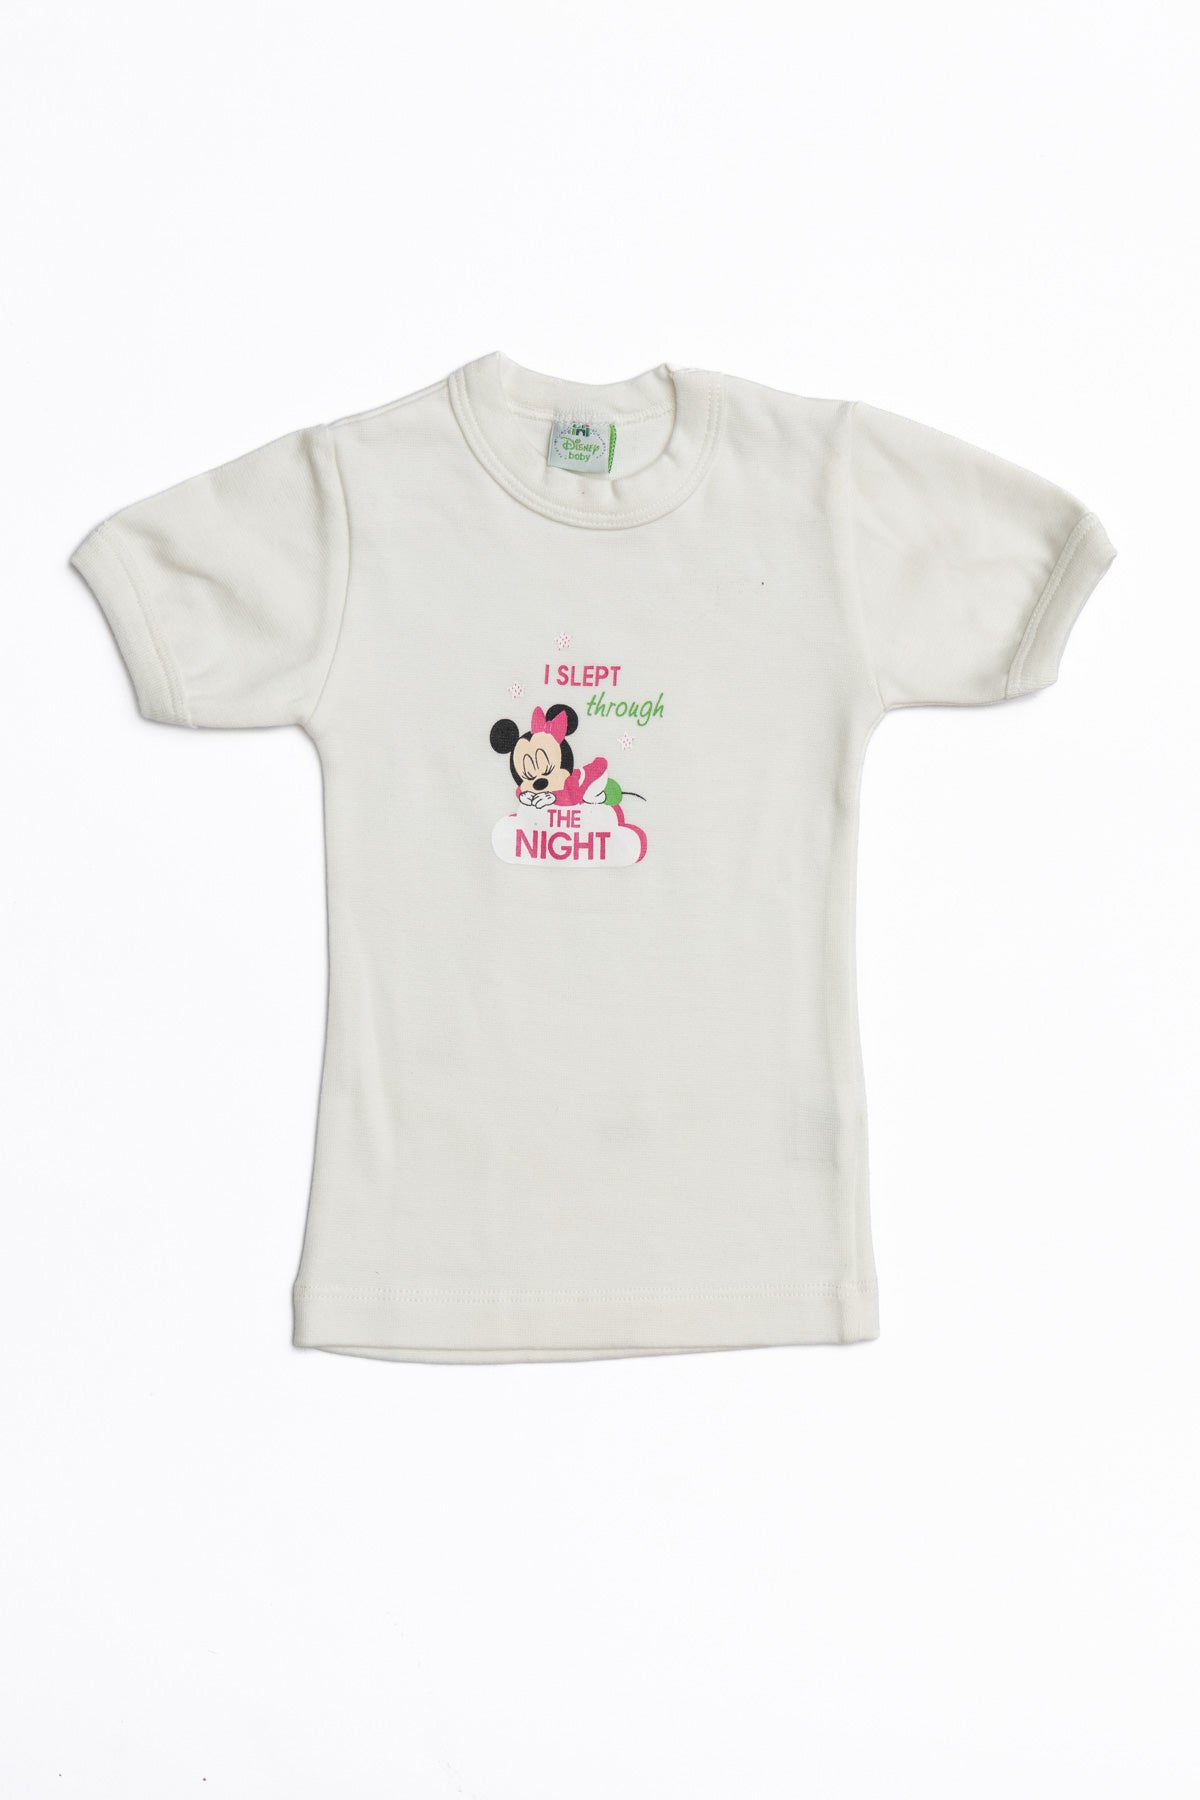 T-Shirt Baby Minnie " The Night" Half sleeve 4122